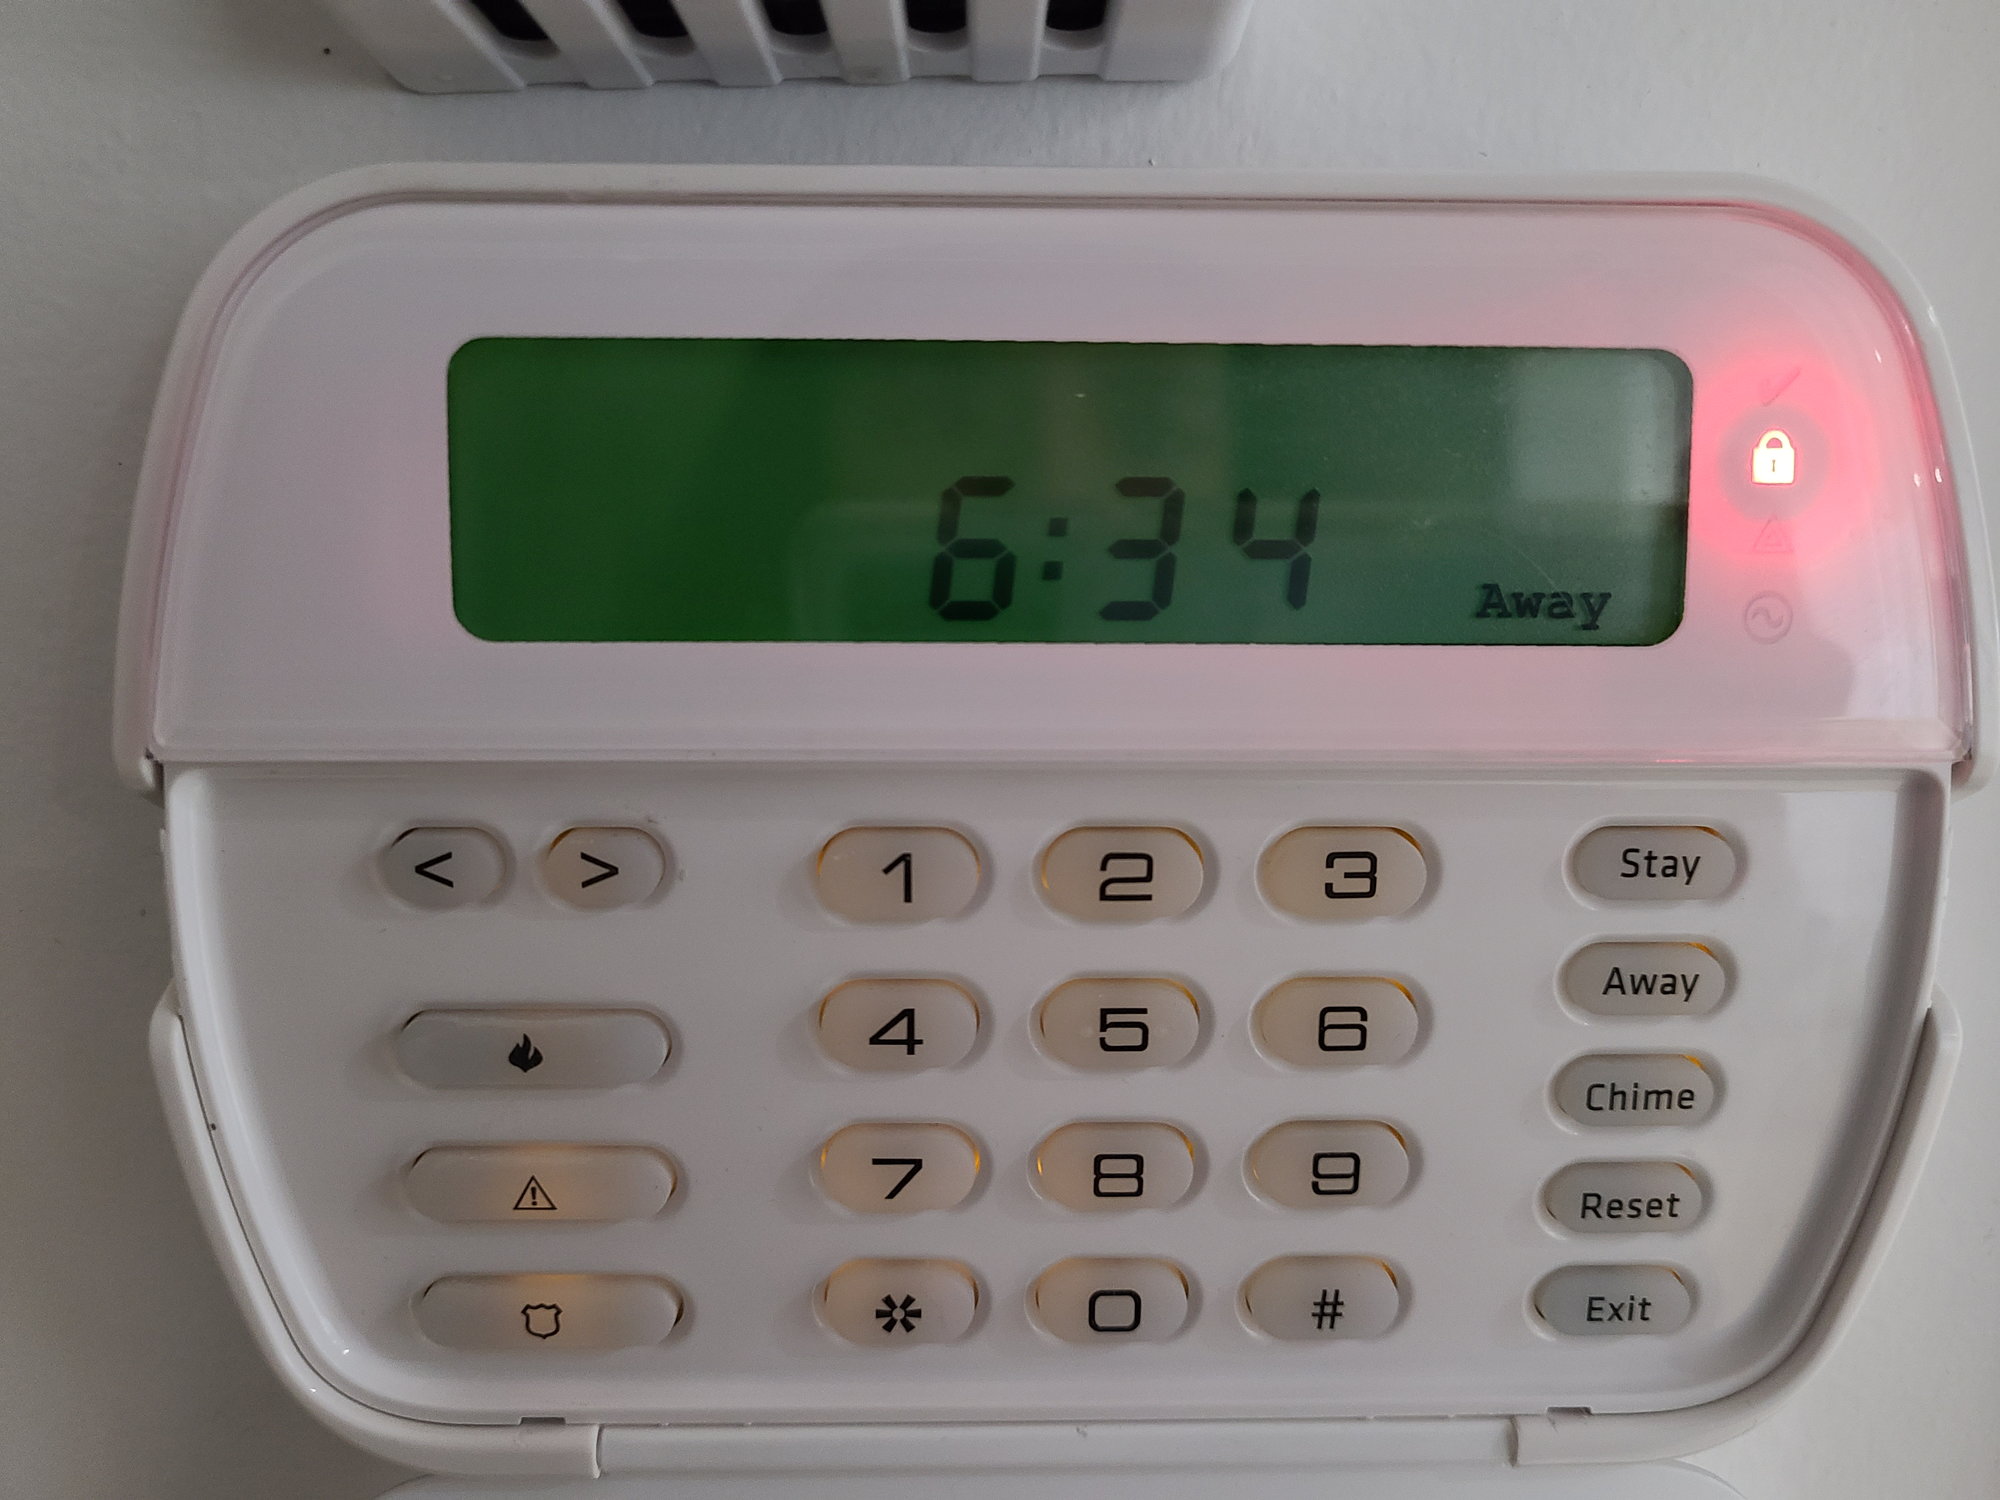 dsc alarm panel yellow system light